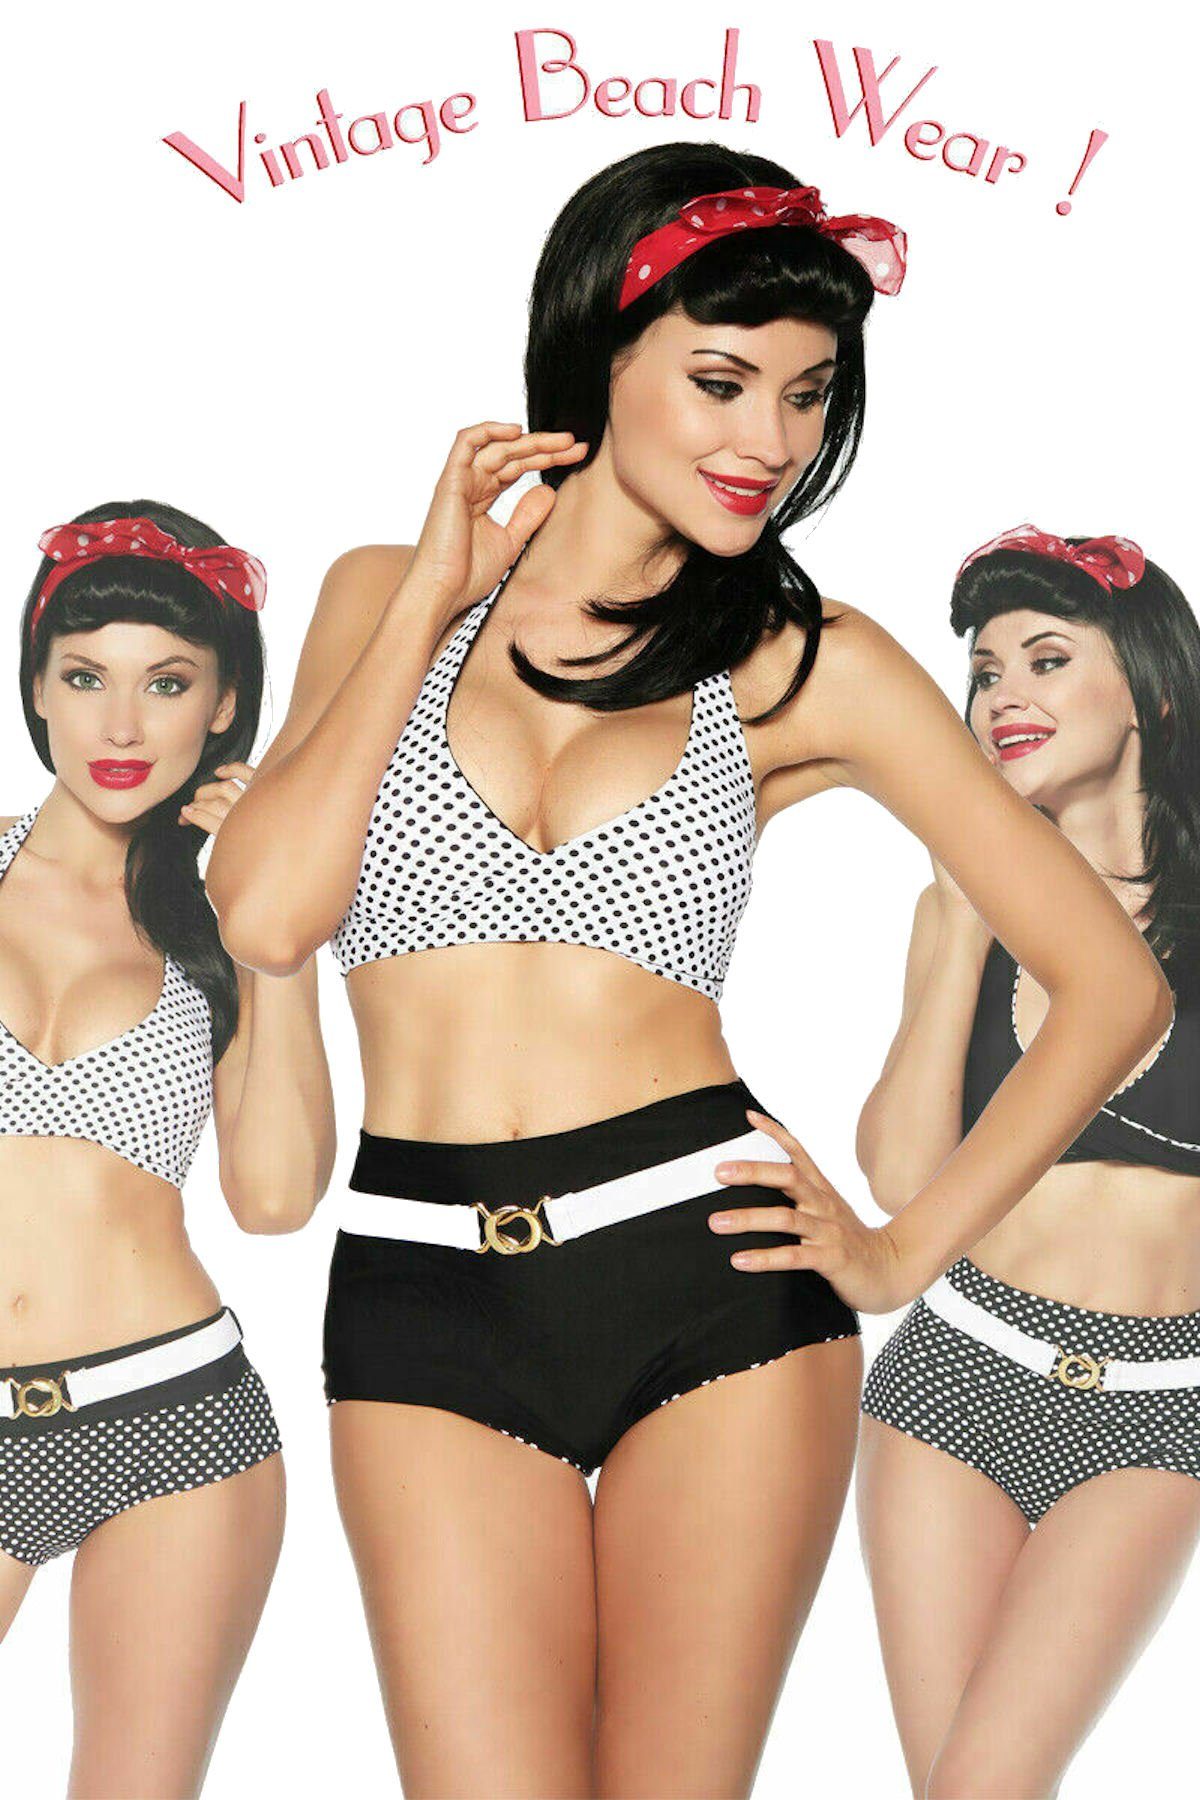 Samegame Triangel-Bikini Rockabilly Wendebikini mit Gürte Vintage-Bikini Set l